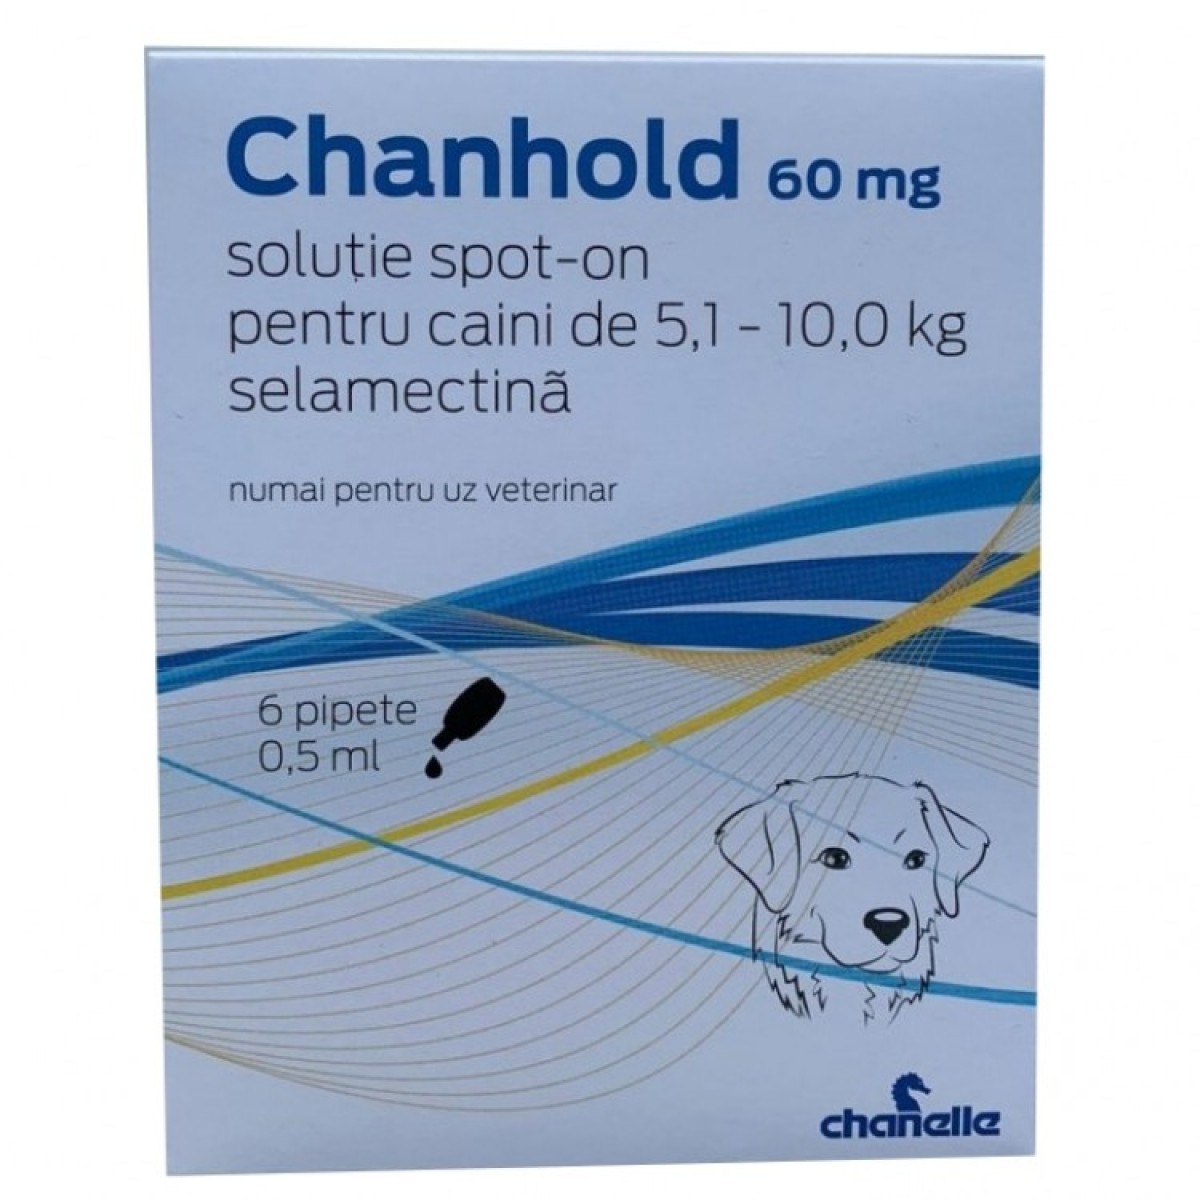 Pipetă antiparazitară Chanhold 60 mg pentru câini între 5 - 10 kg, Antiparazitare externe, Antiparazitare, Câini 